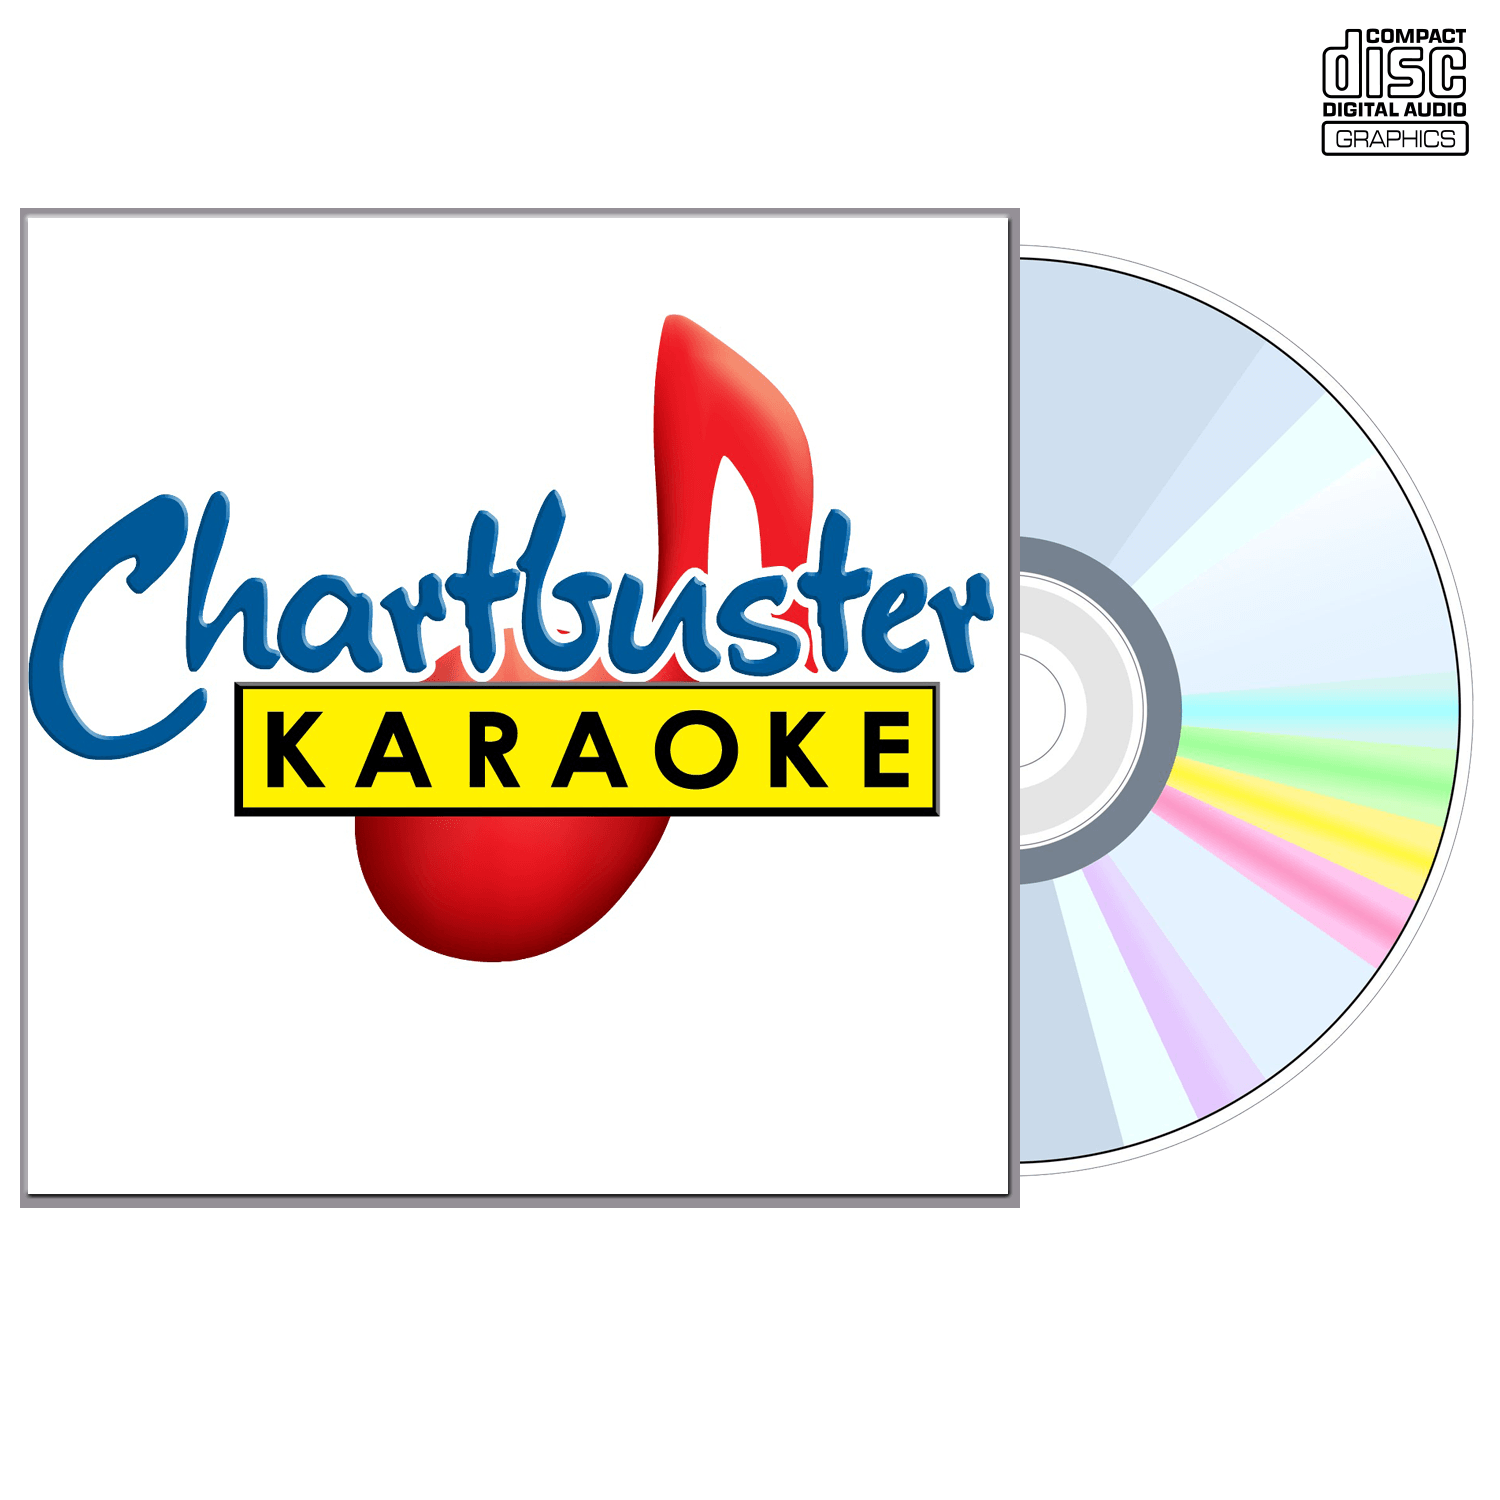 Whitney Houston Vol 3 - CD+G - Chartbuster Karaoke - Karaoke Home Entertainment